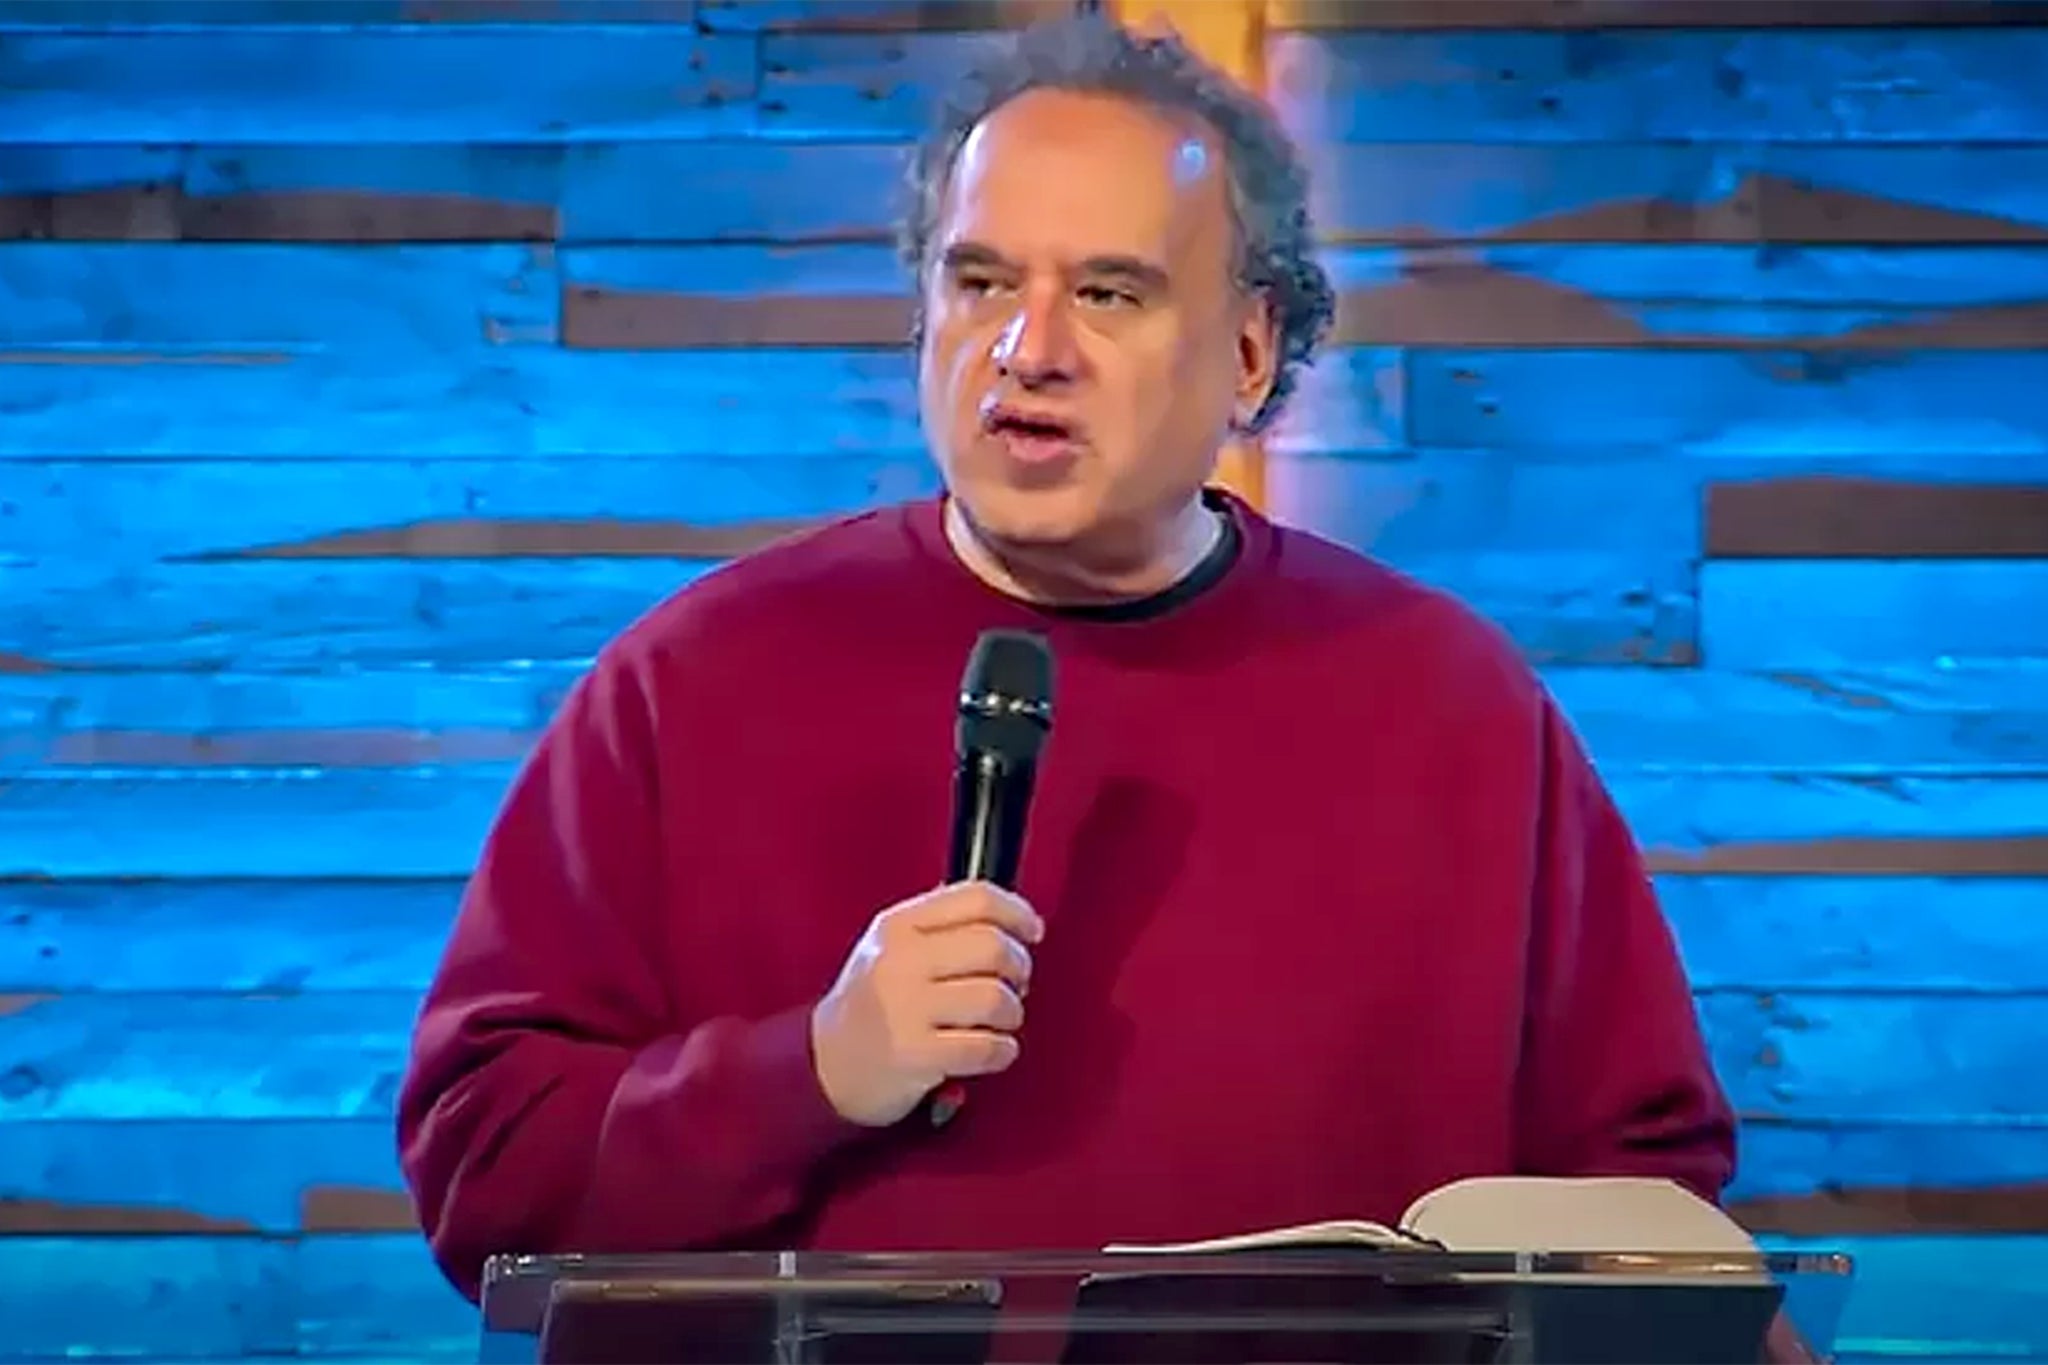 Evangelical preacher Mike Pilavachi founded the Soul Survivor Watford Church